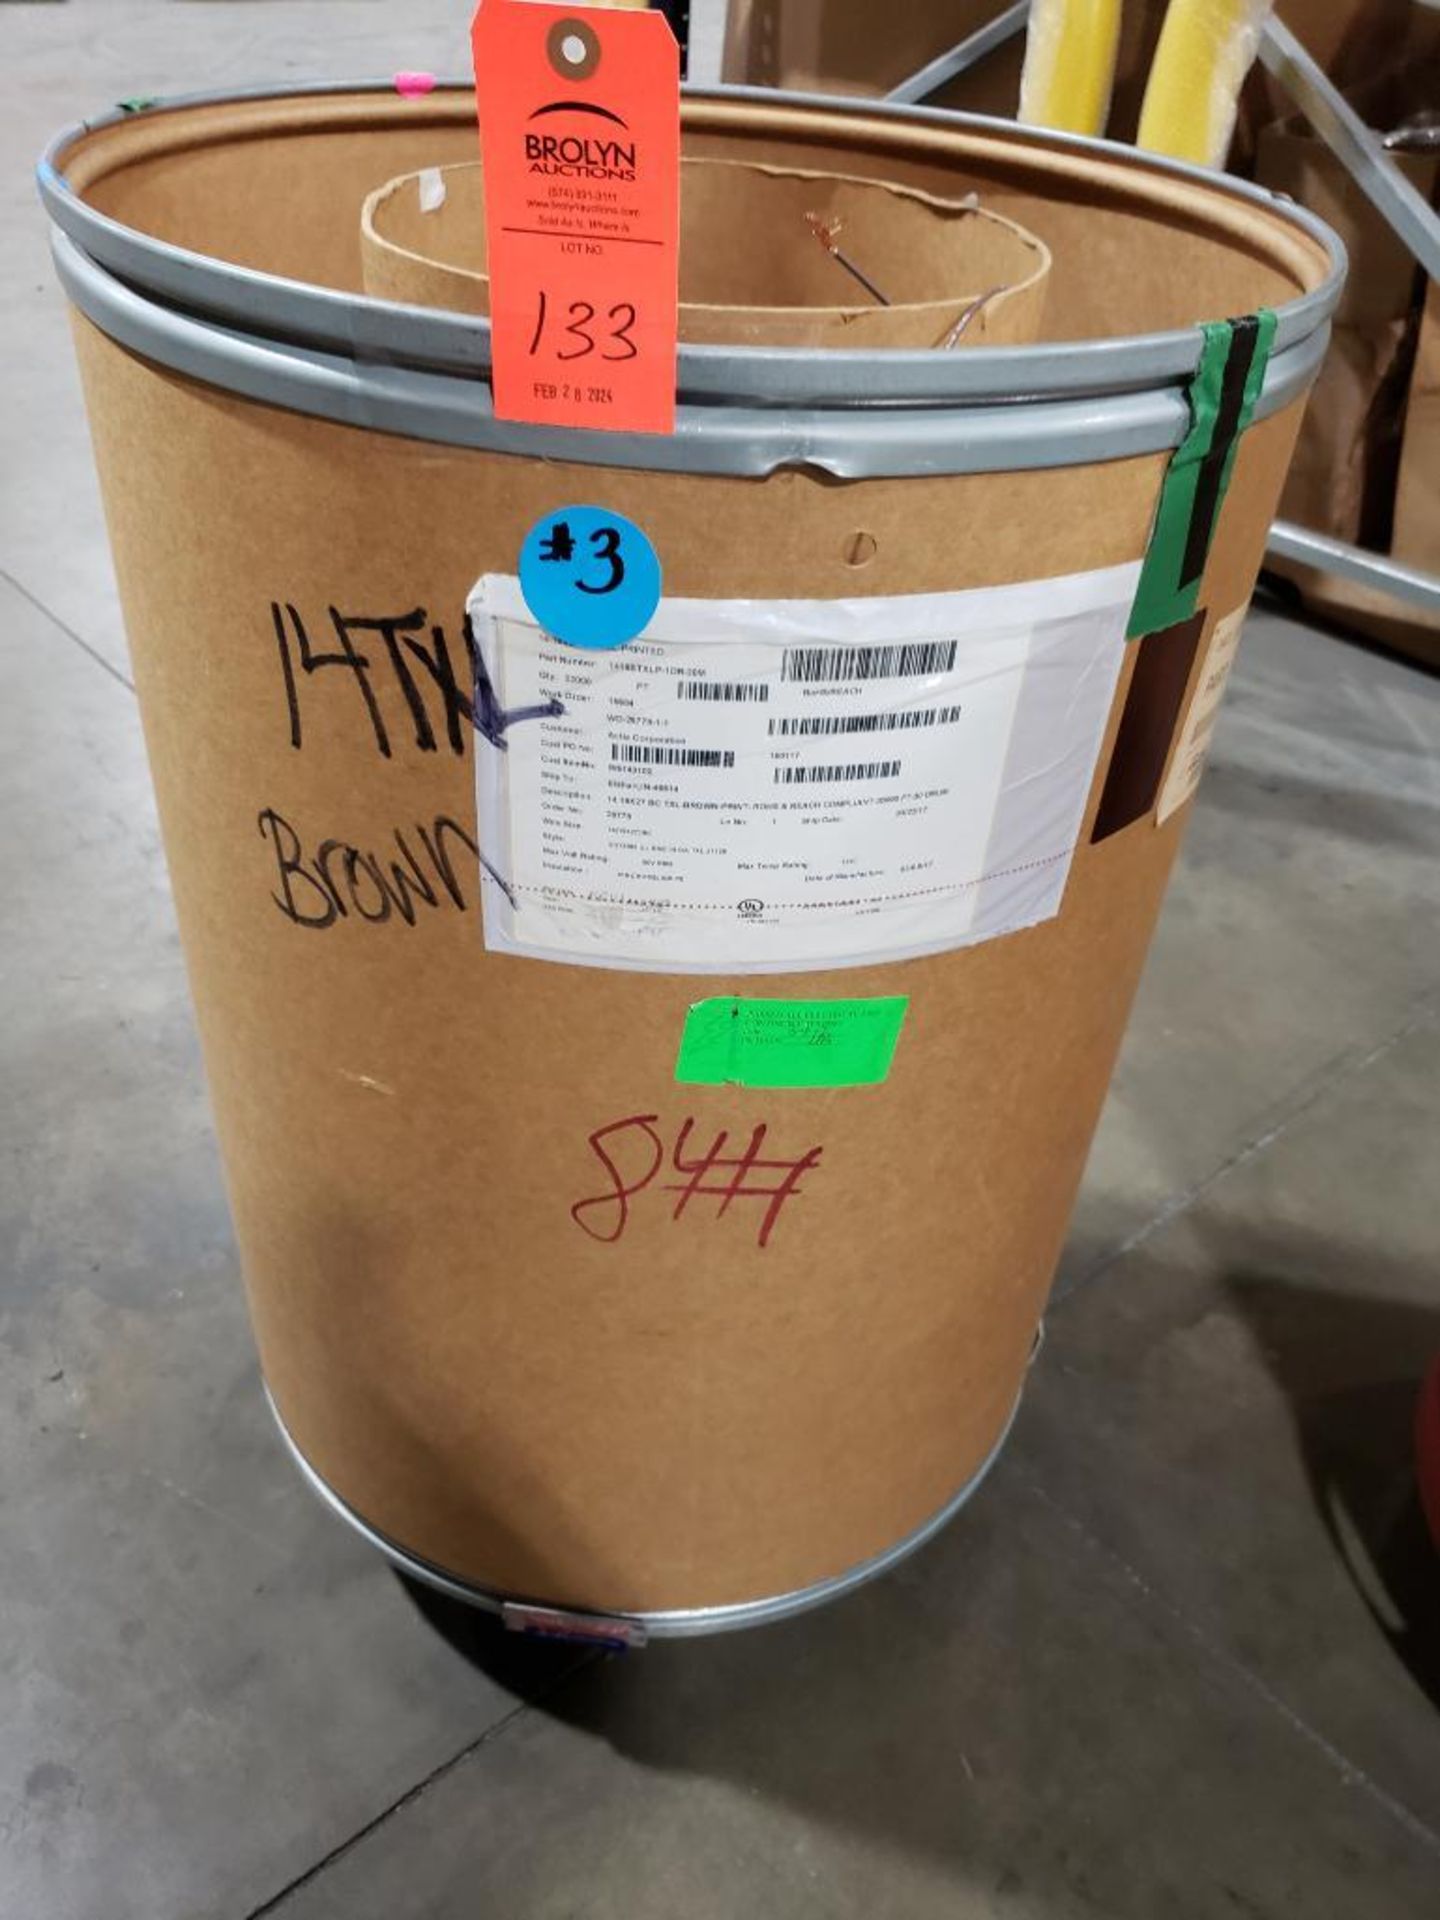 Qty 1 - Barrel 14 awg brown copper wire. Gross barrel weight, 84lbs. Partial barrel.